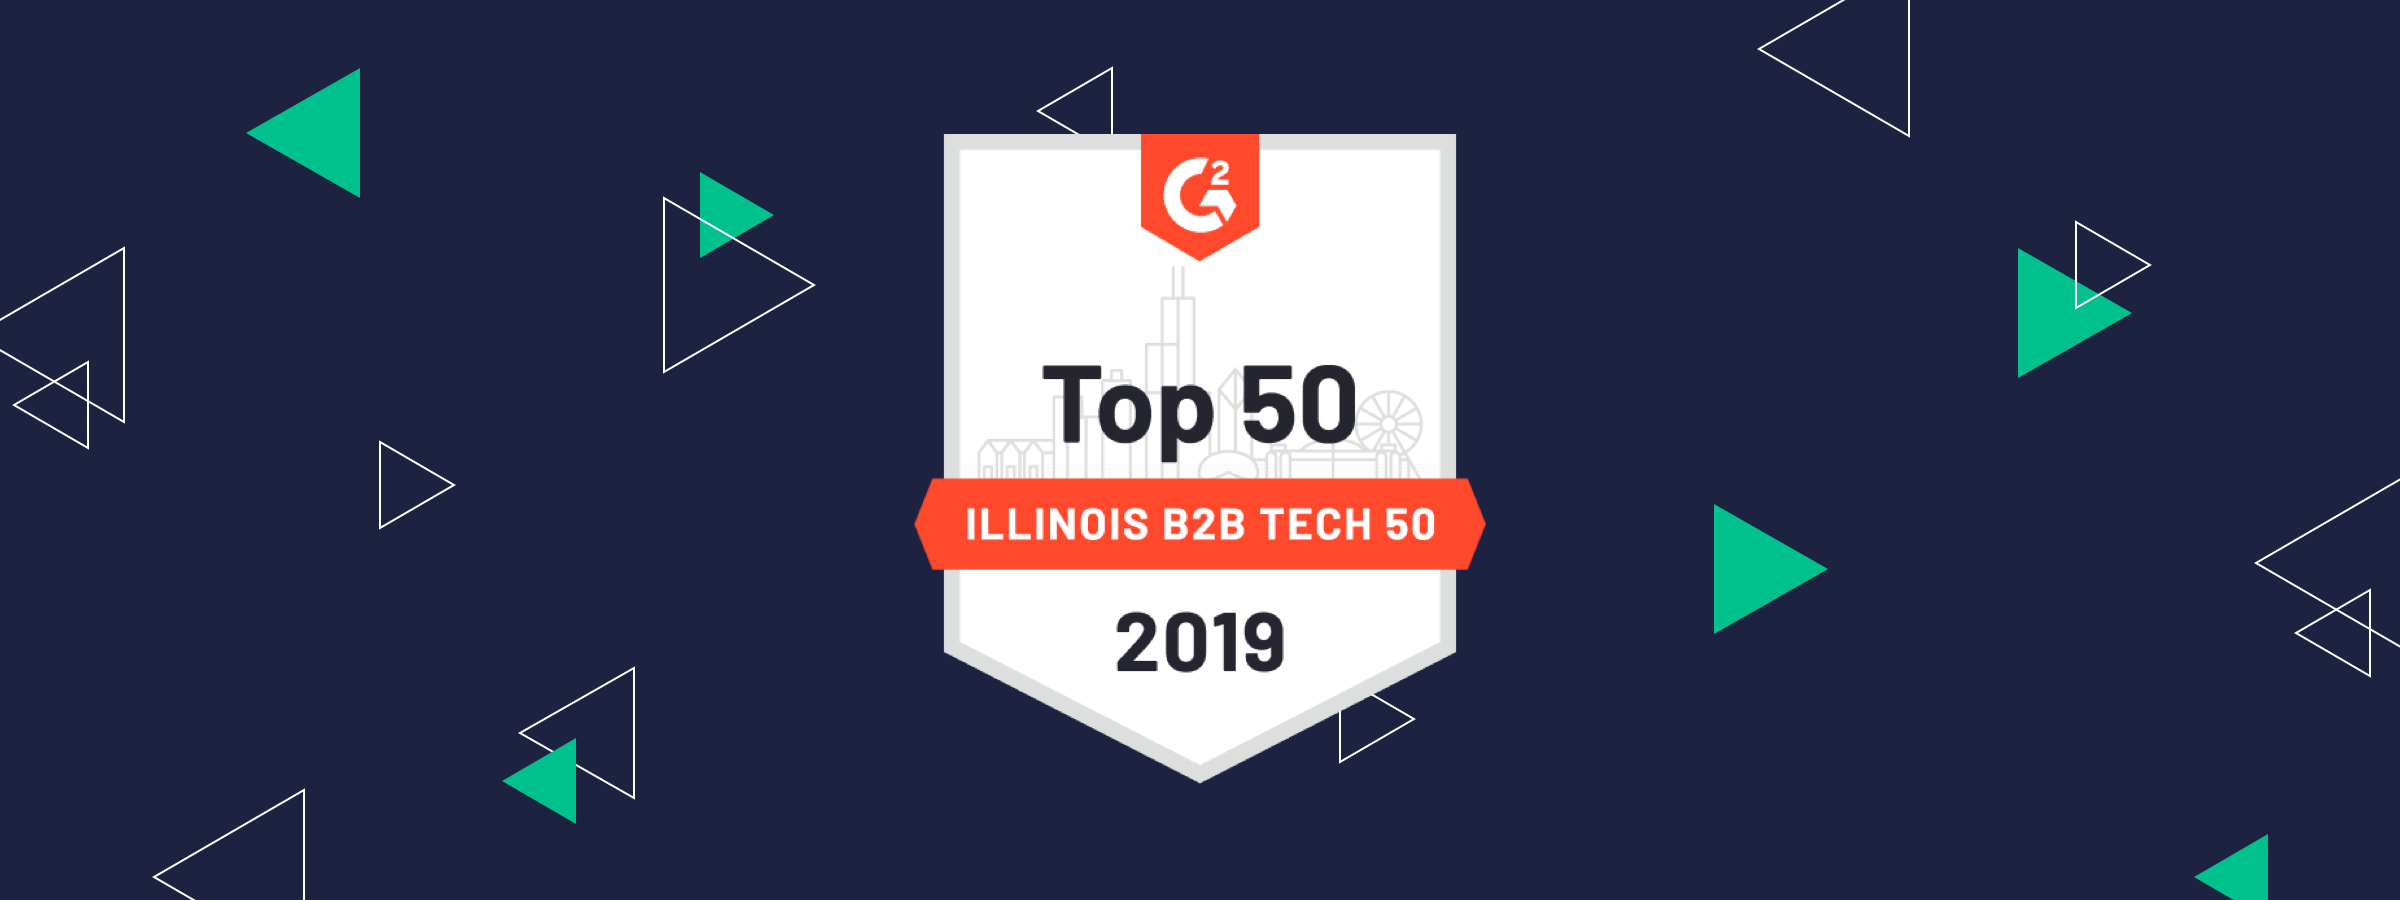 G2 Crowd Top 50 Illinois B2b Tech 50